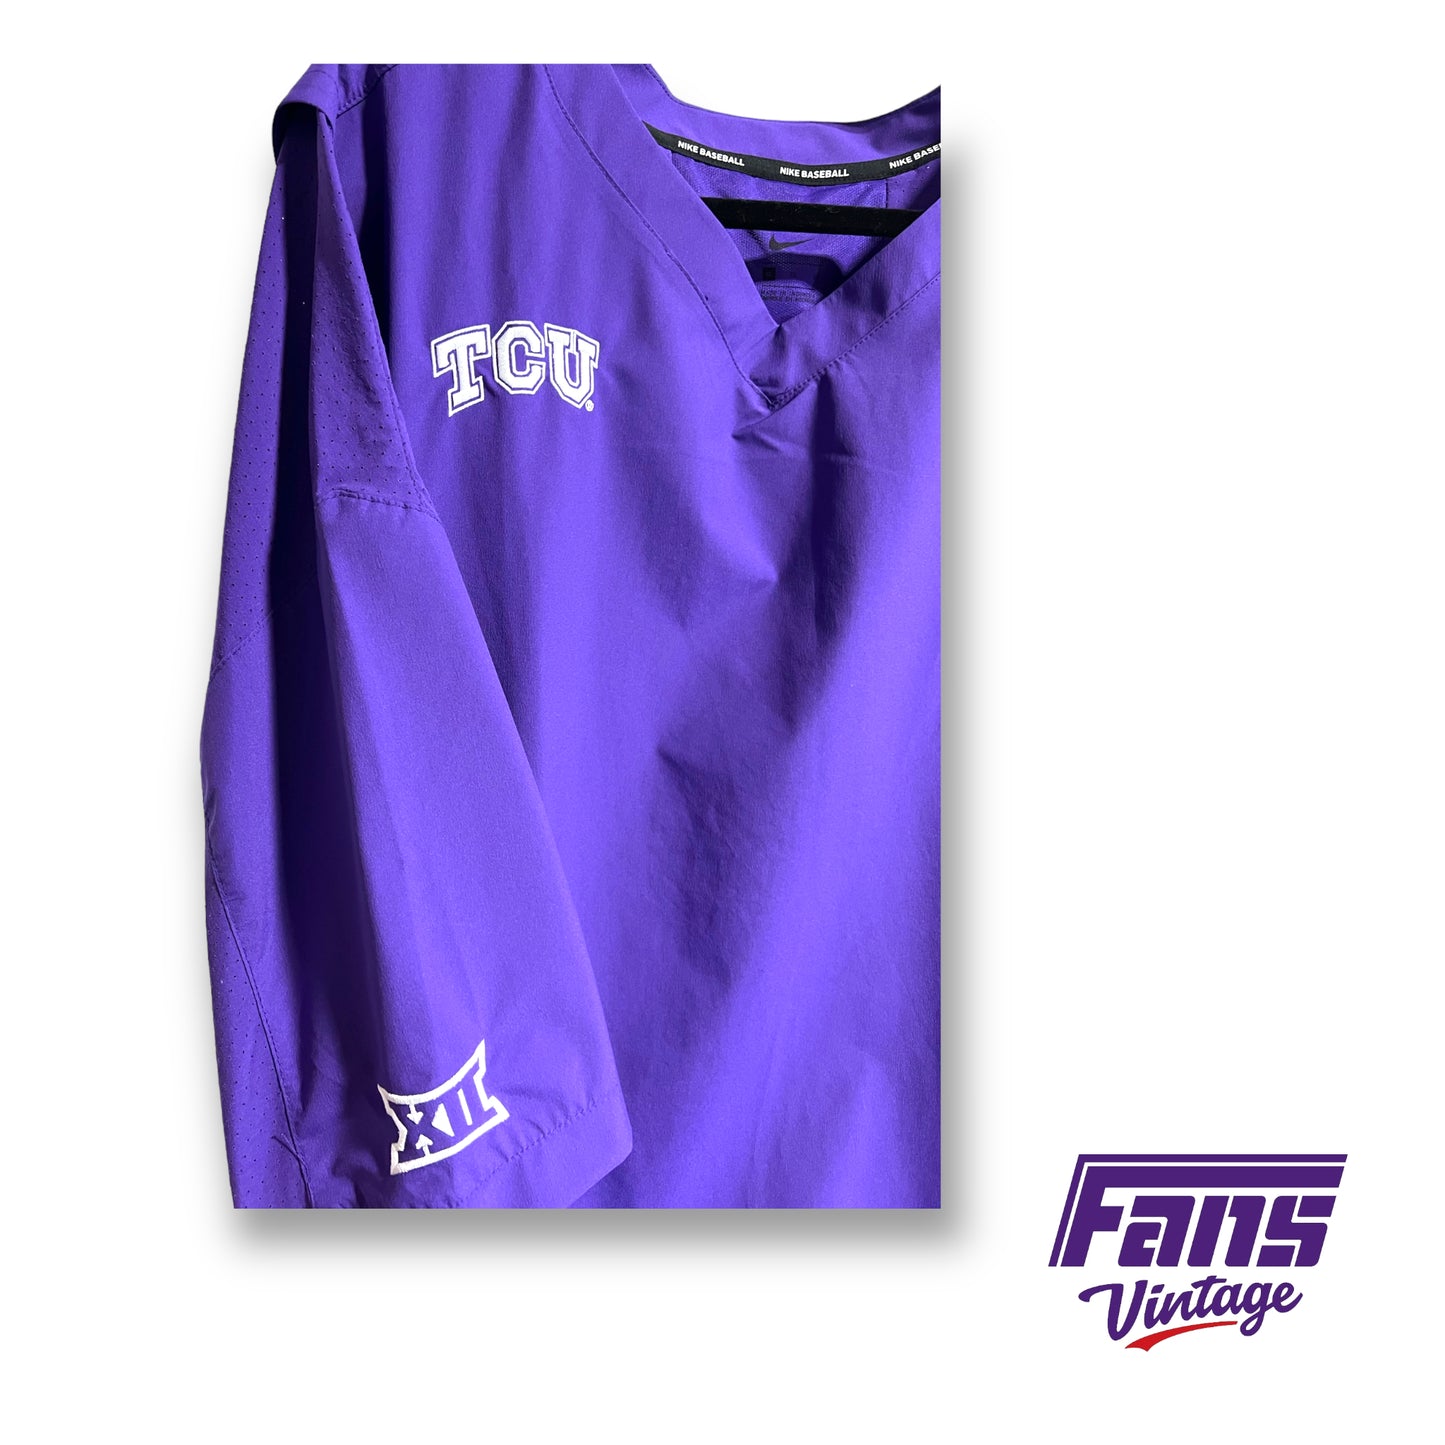 Nike TCU Baseball 3/4 sleeve pullover - dugout jacket